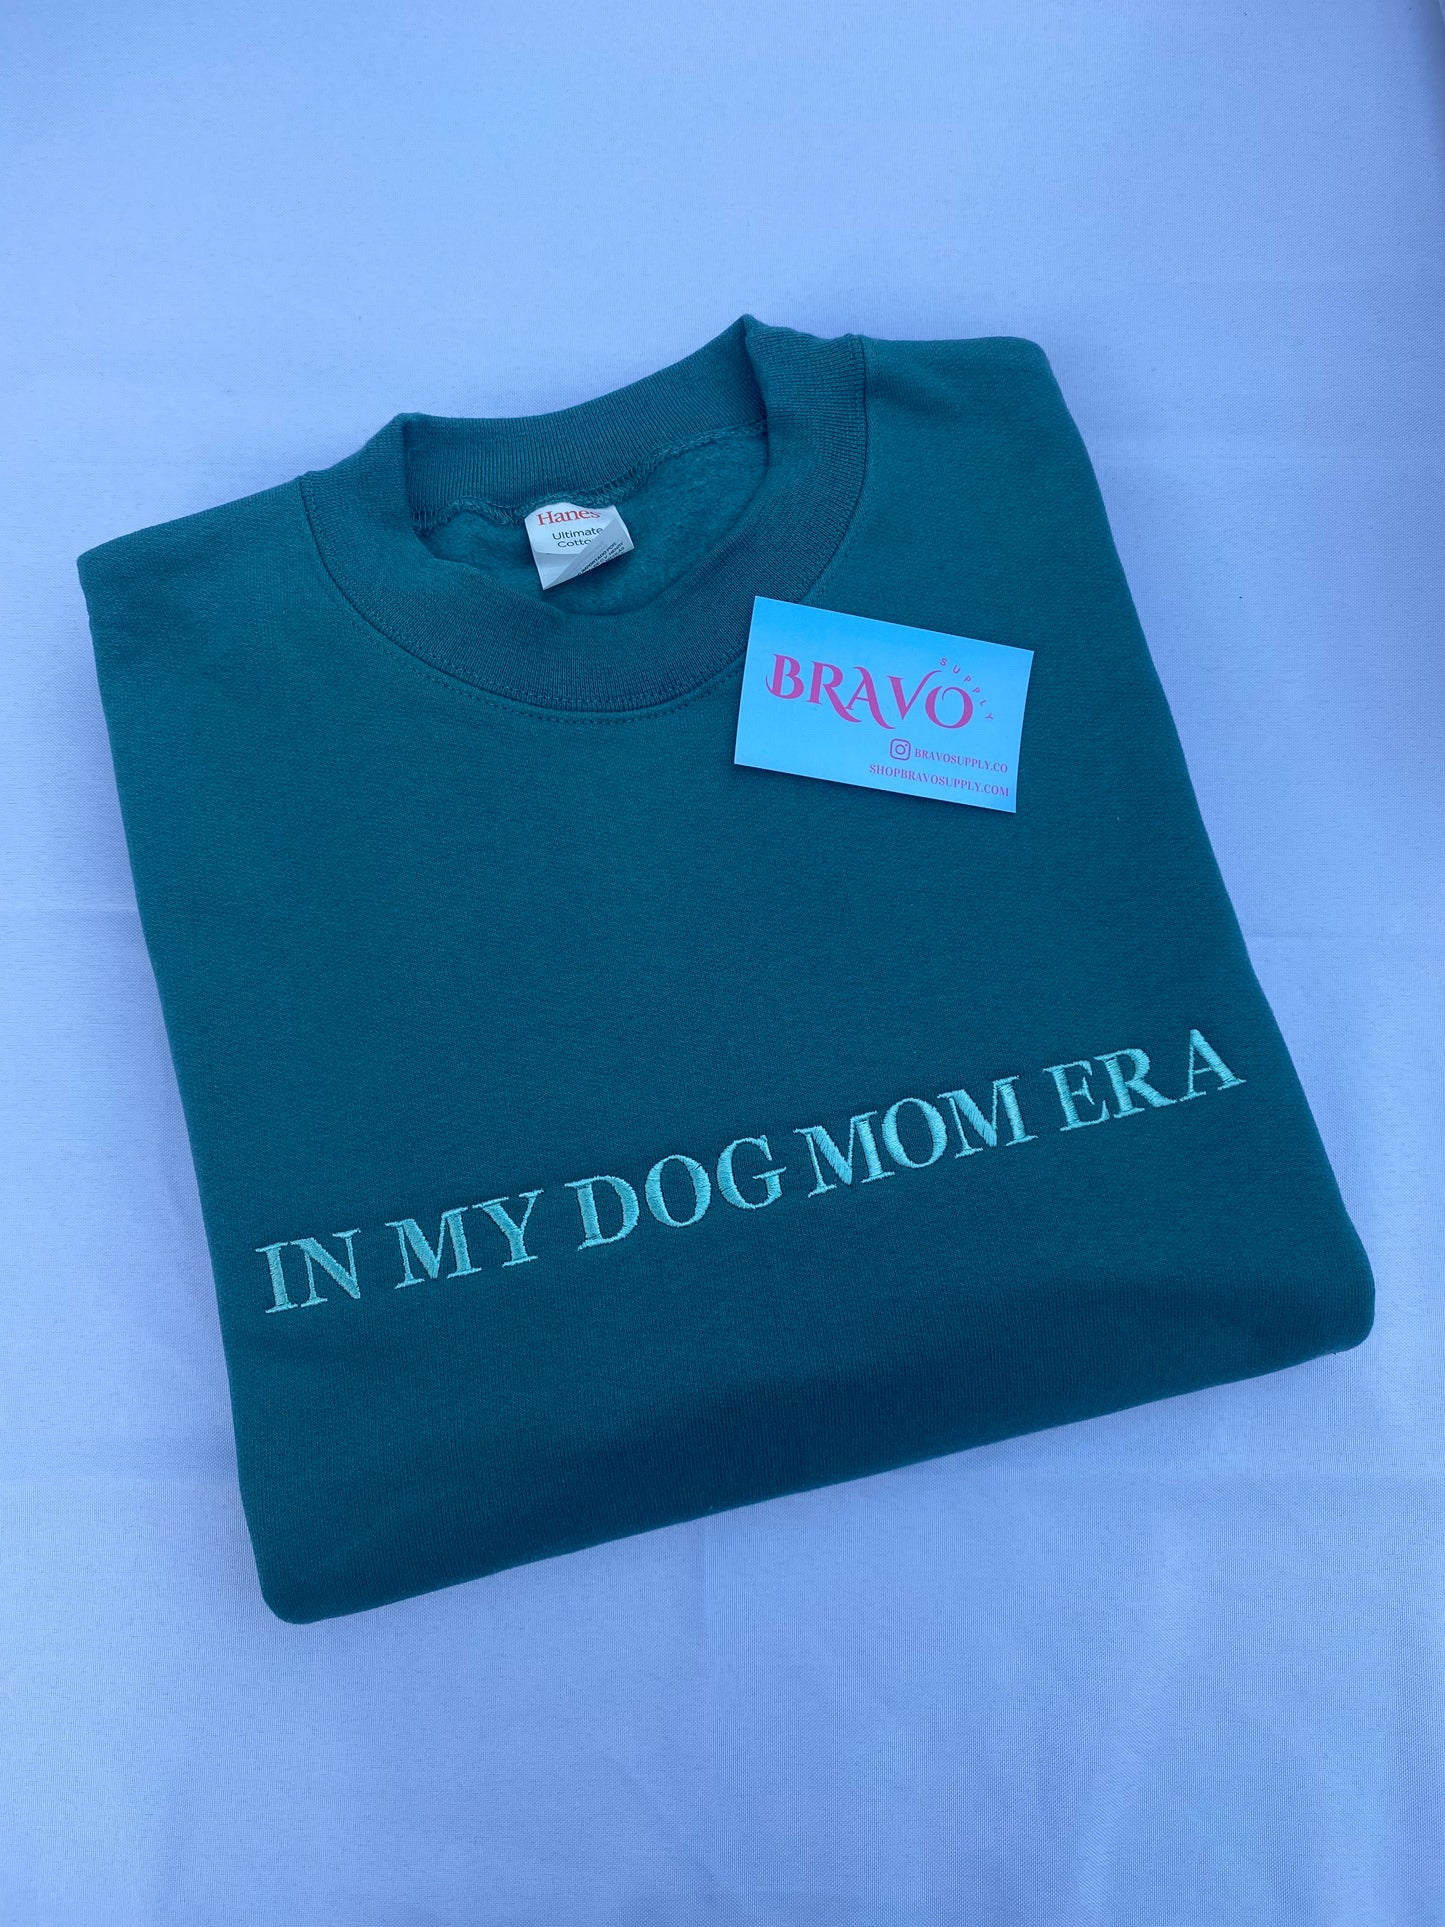 In my dog mom era embroidered sweatshirt